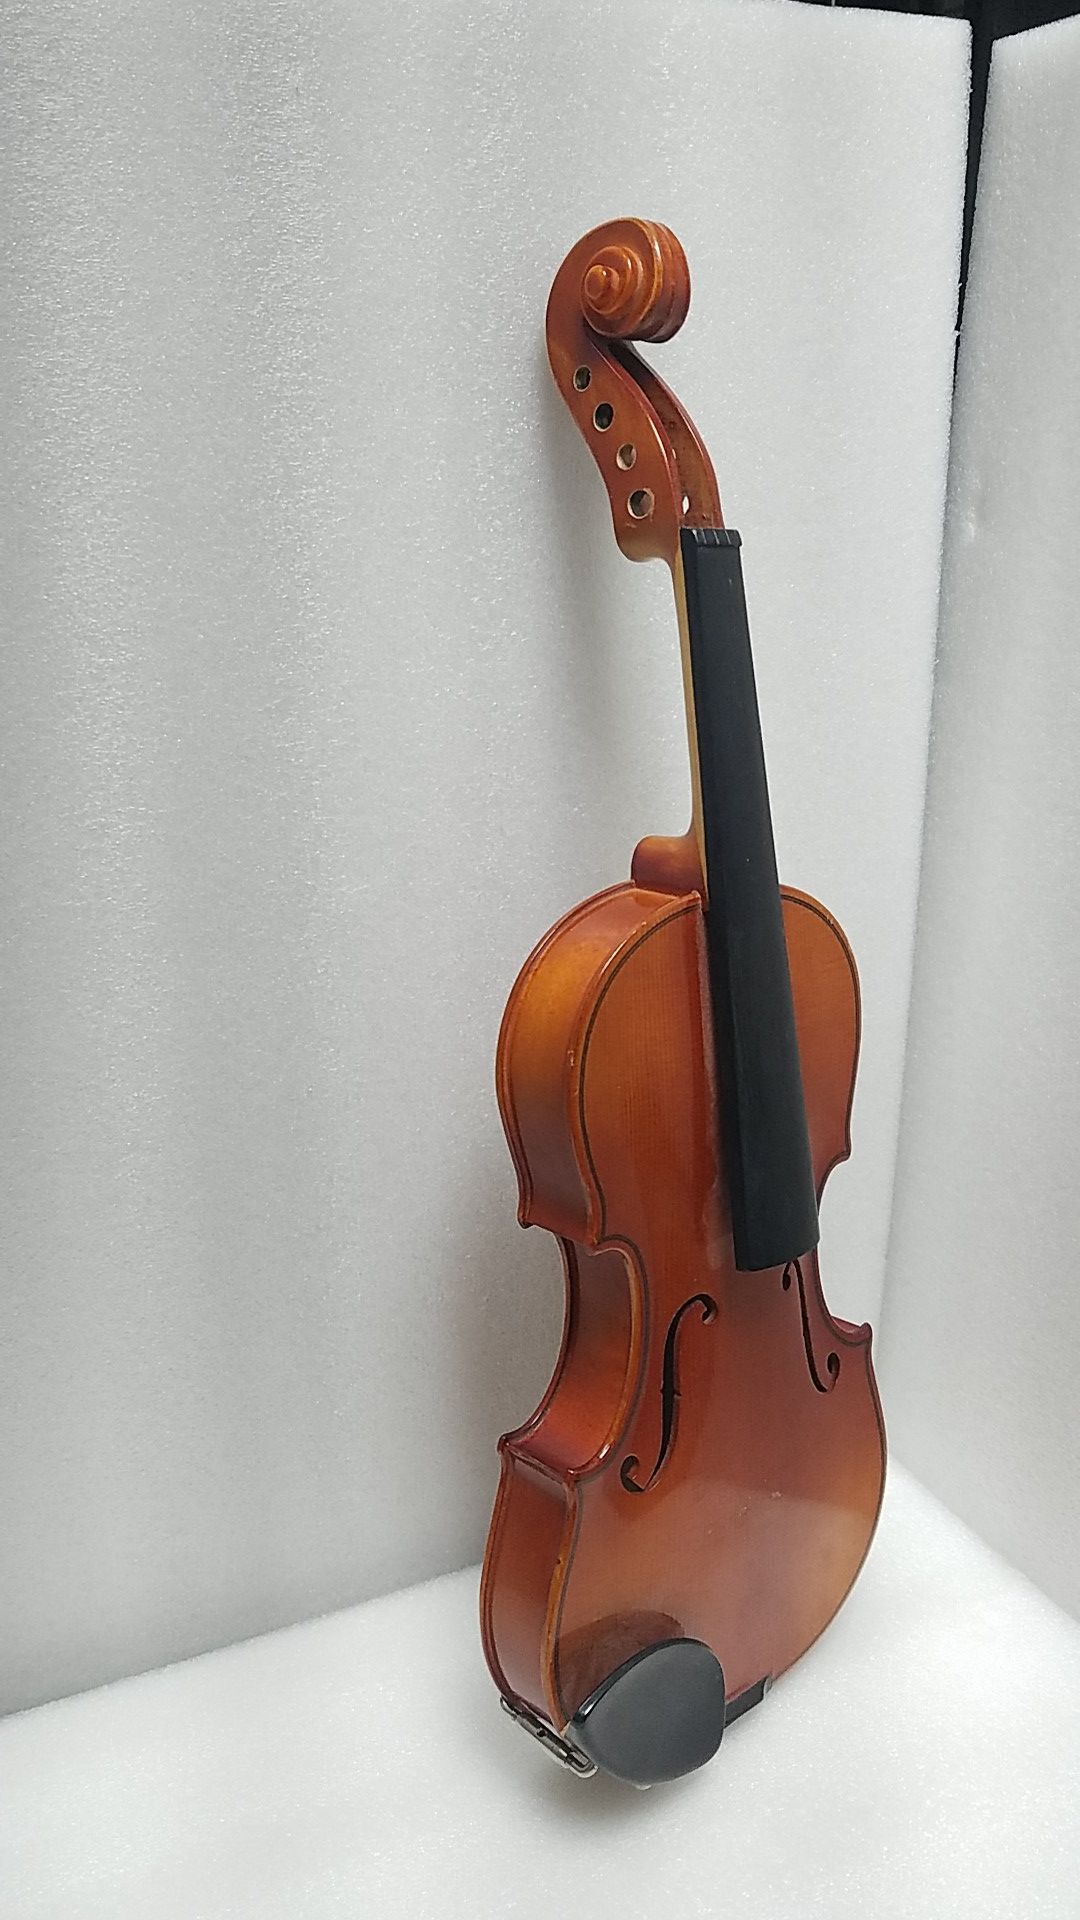 SUZUKI 1/10 size child Violin for parts or repair.